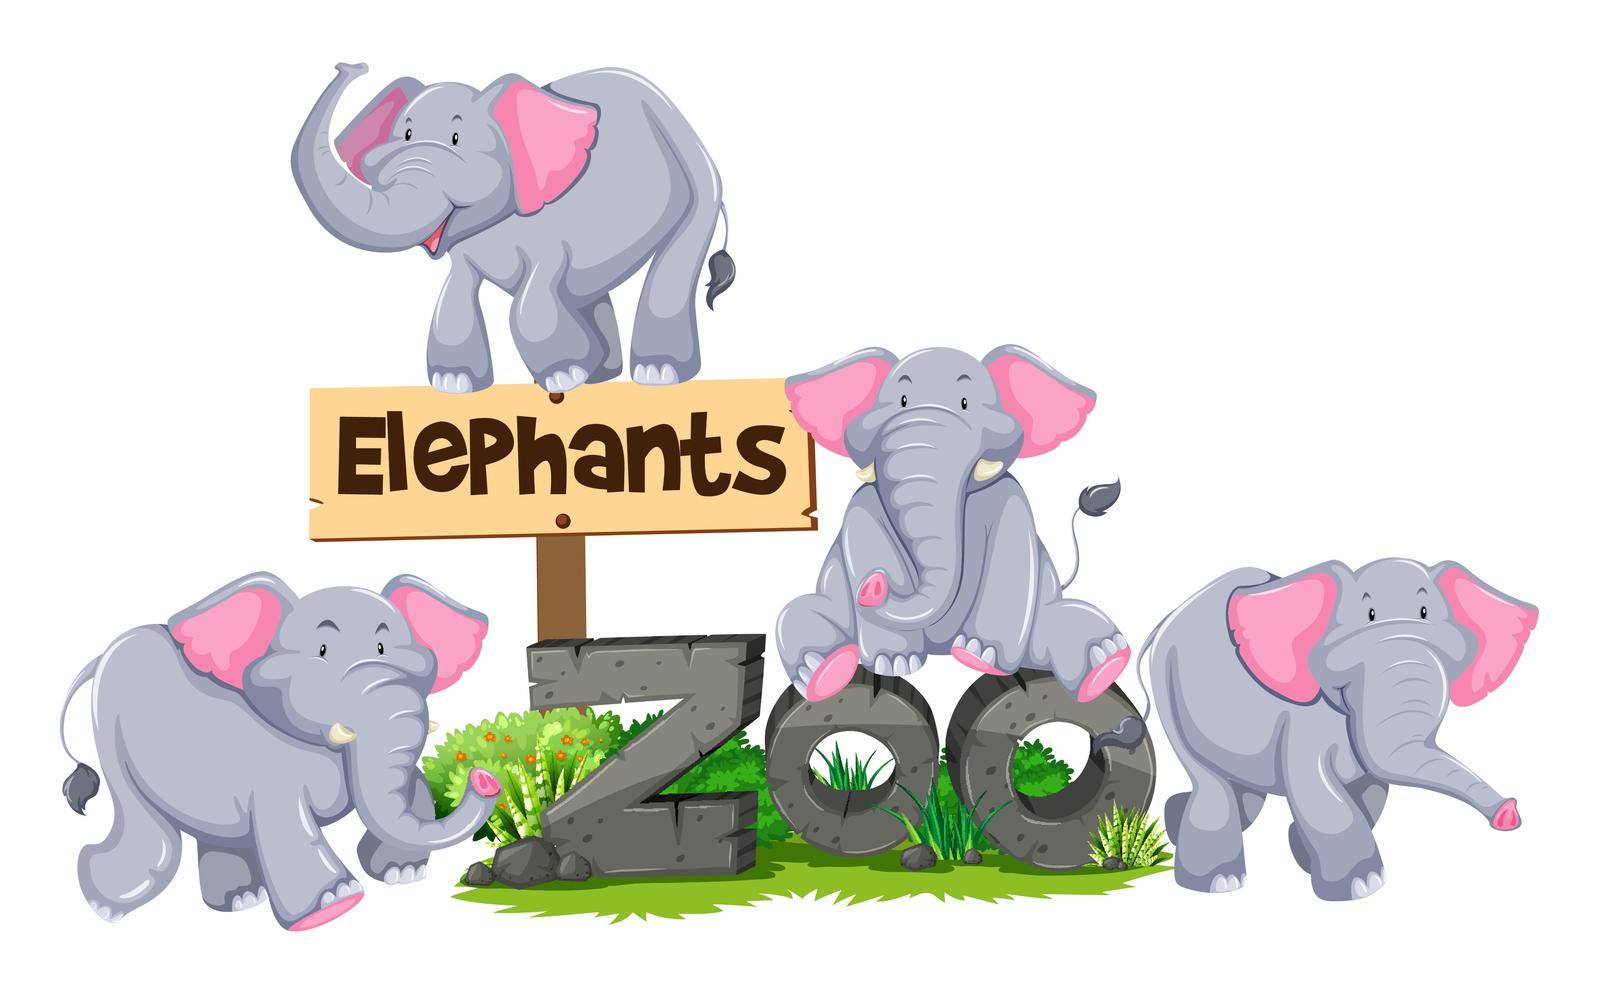 Elephants around the zoo sign illustration